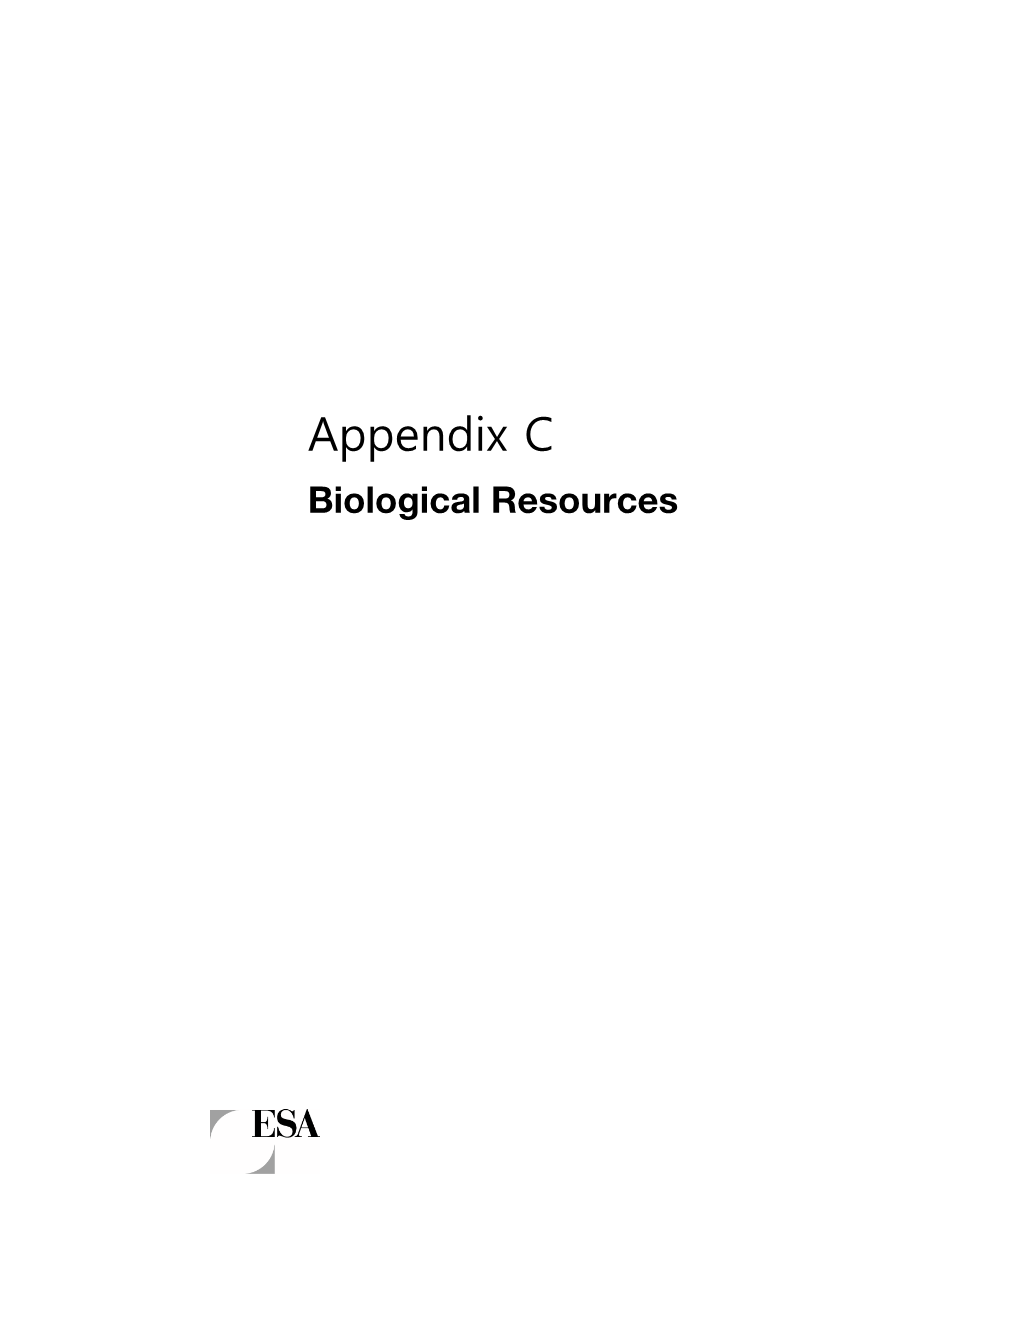 Appendix C Biological Resources